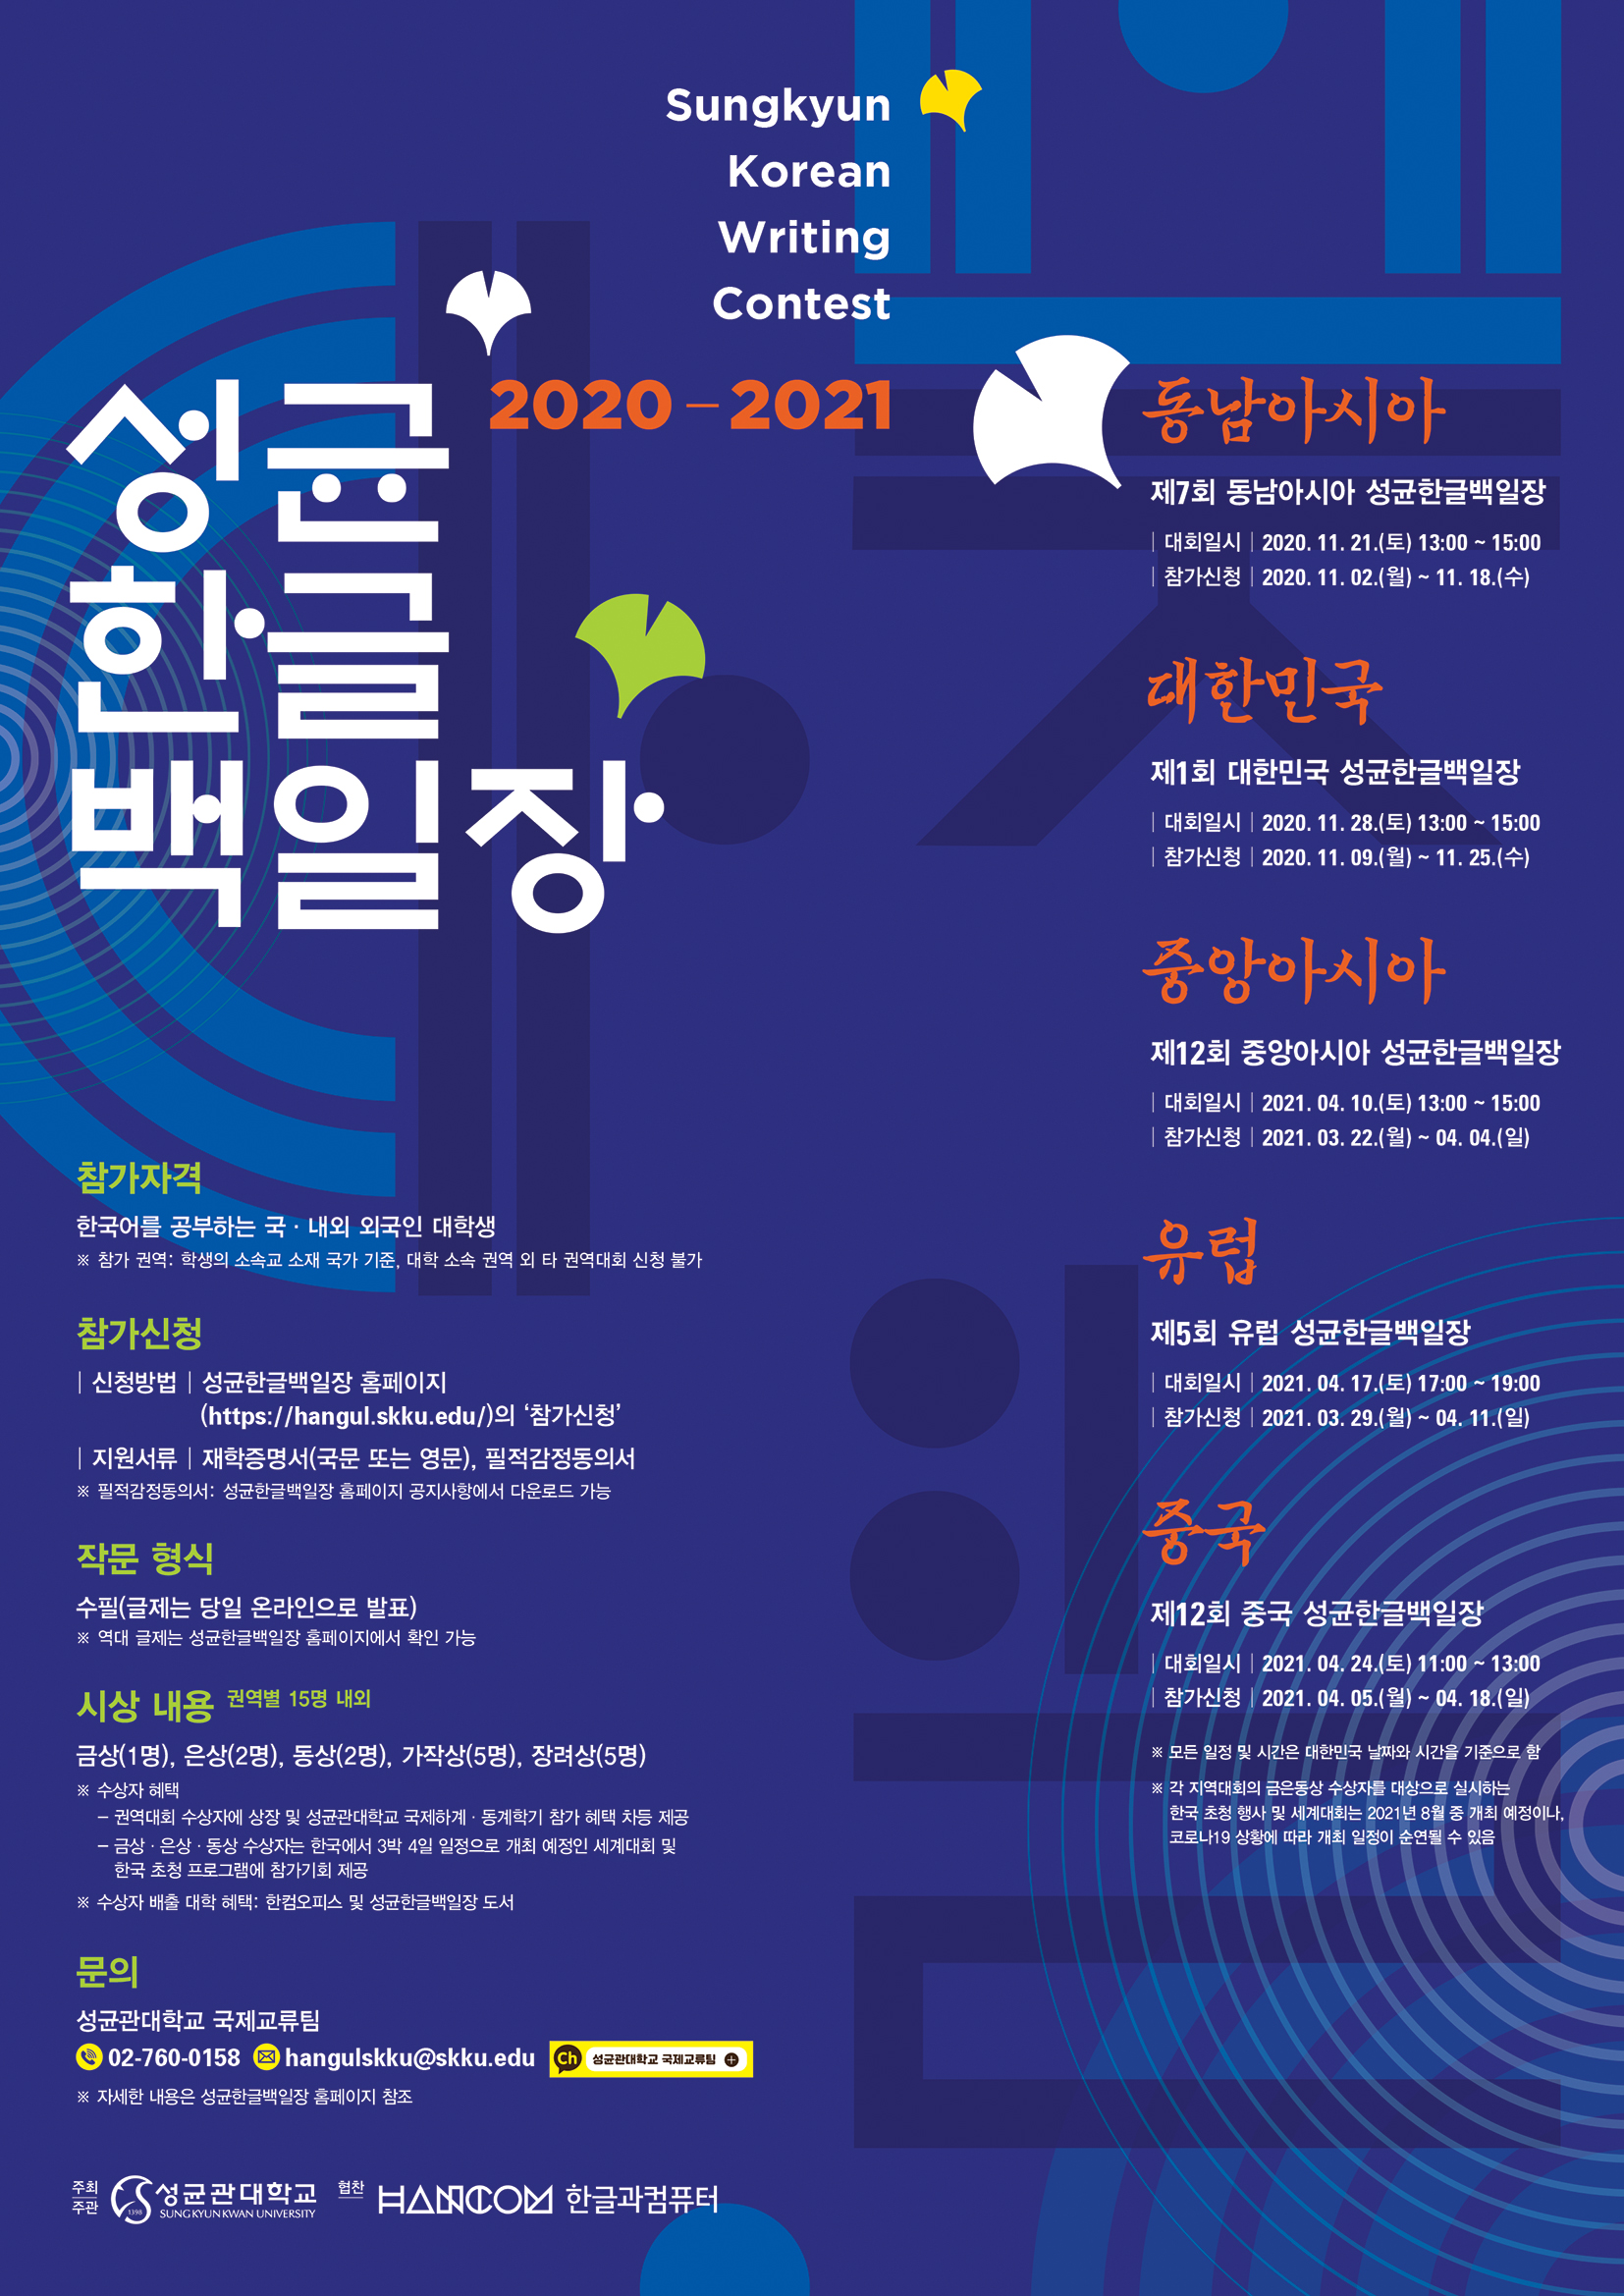 2020-2021 Sungkyun Korean Writing Contest